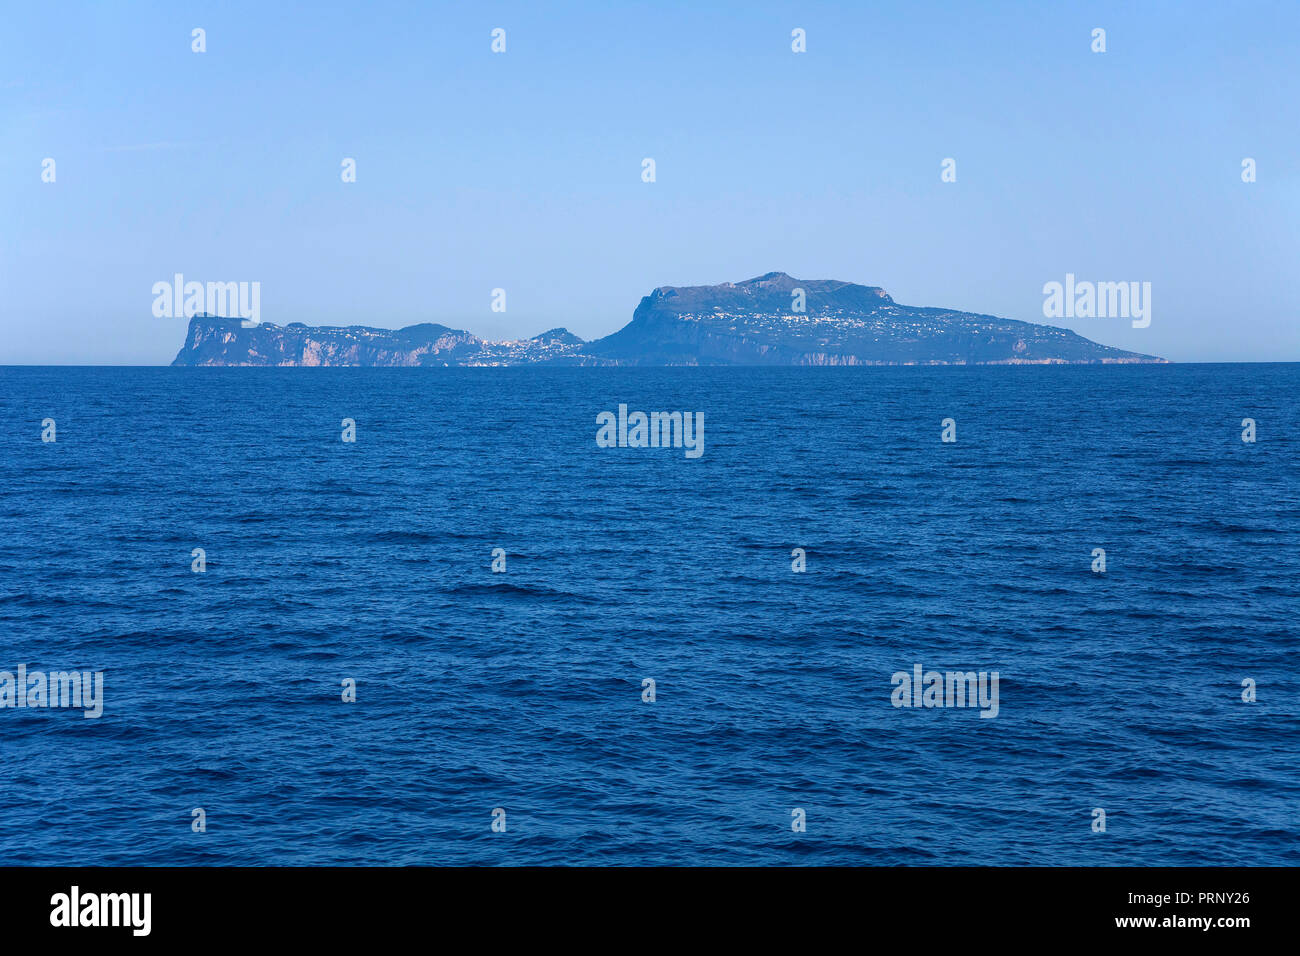 Die Insel Capri im Golf von Neapel, Kampanien, Italien | Total view of Capri island, Gulf of Naples, Campania, Italy Stock Photo